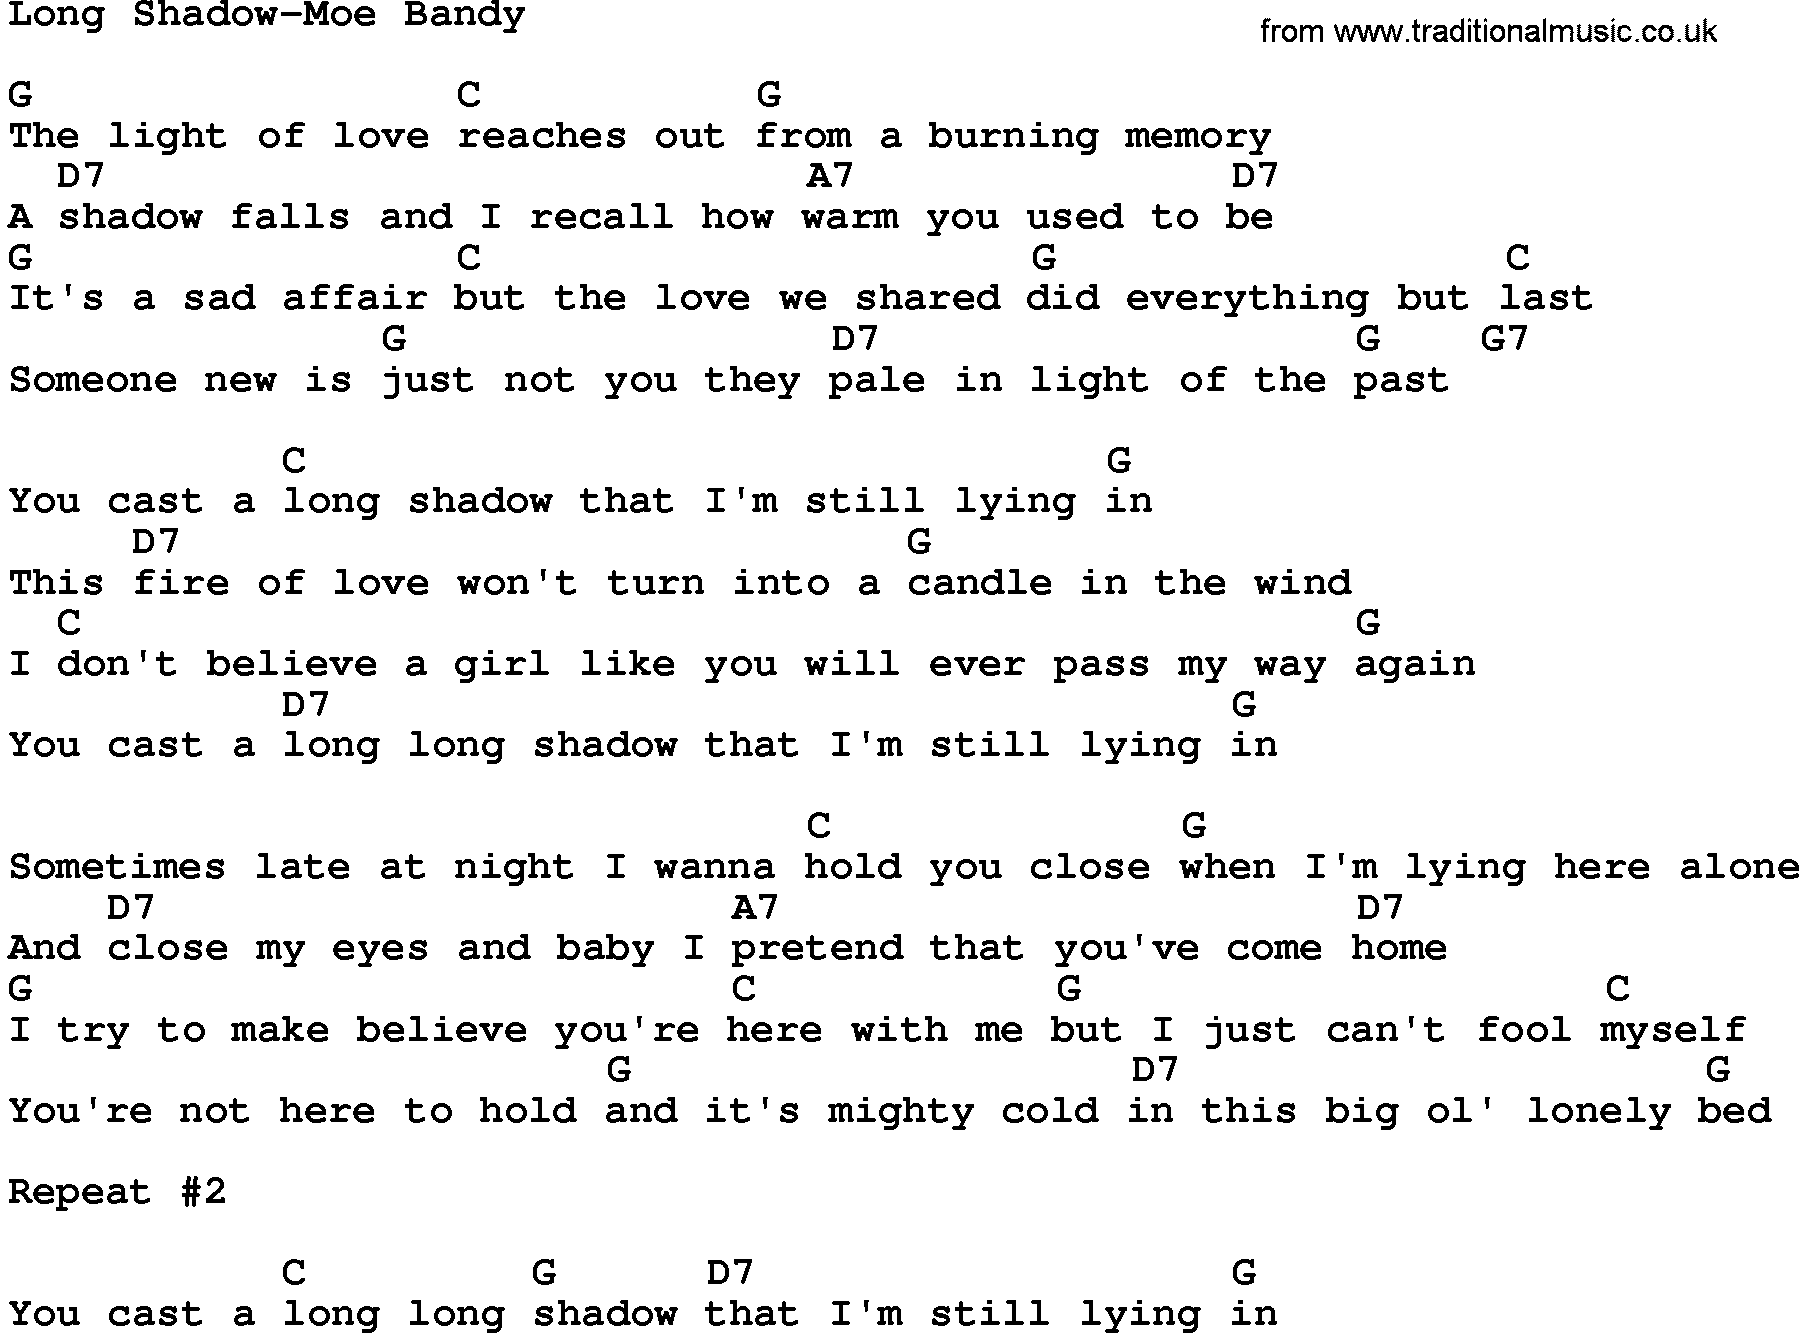 Country music song: Long Shadow-Moe Bandy lyrics and chords